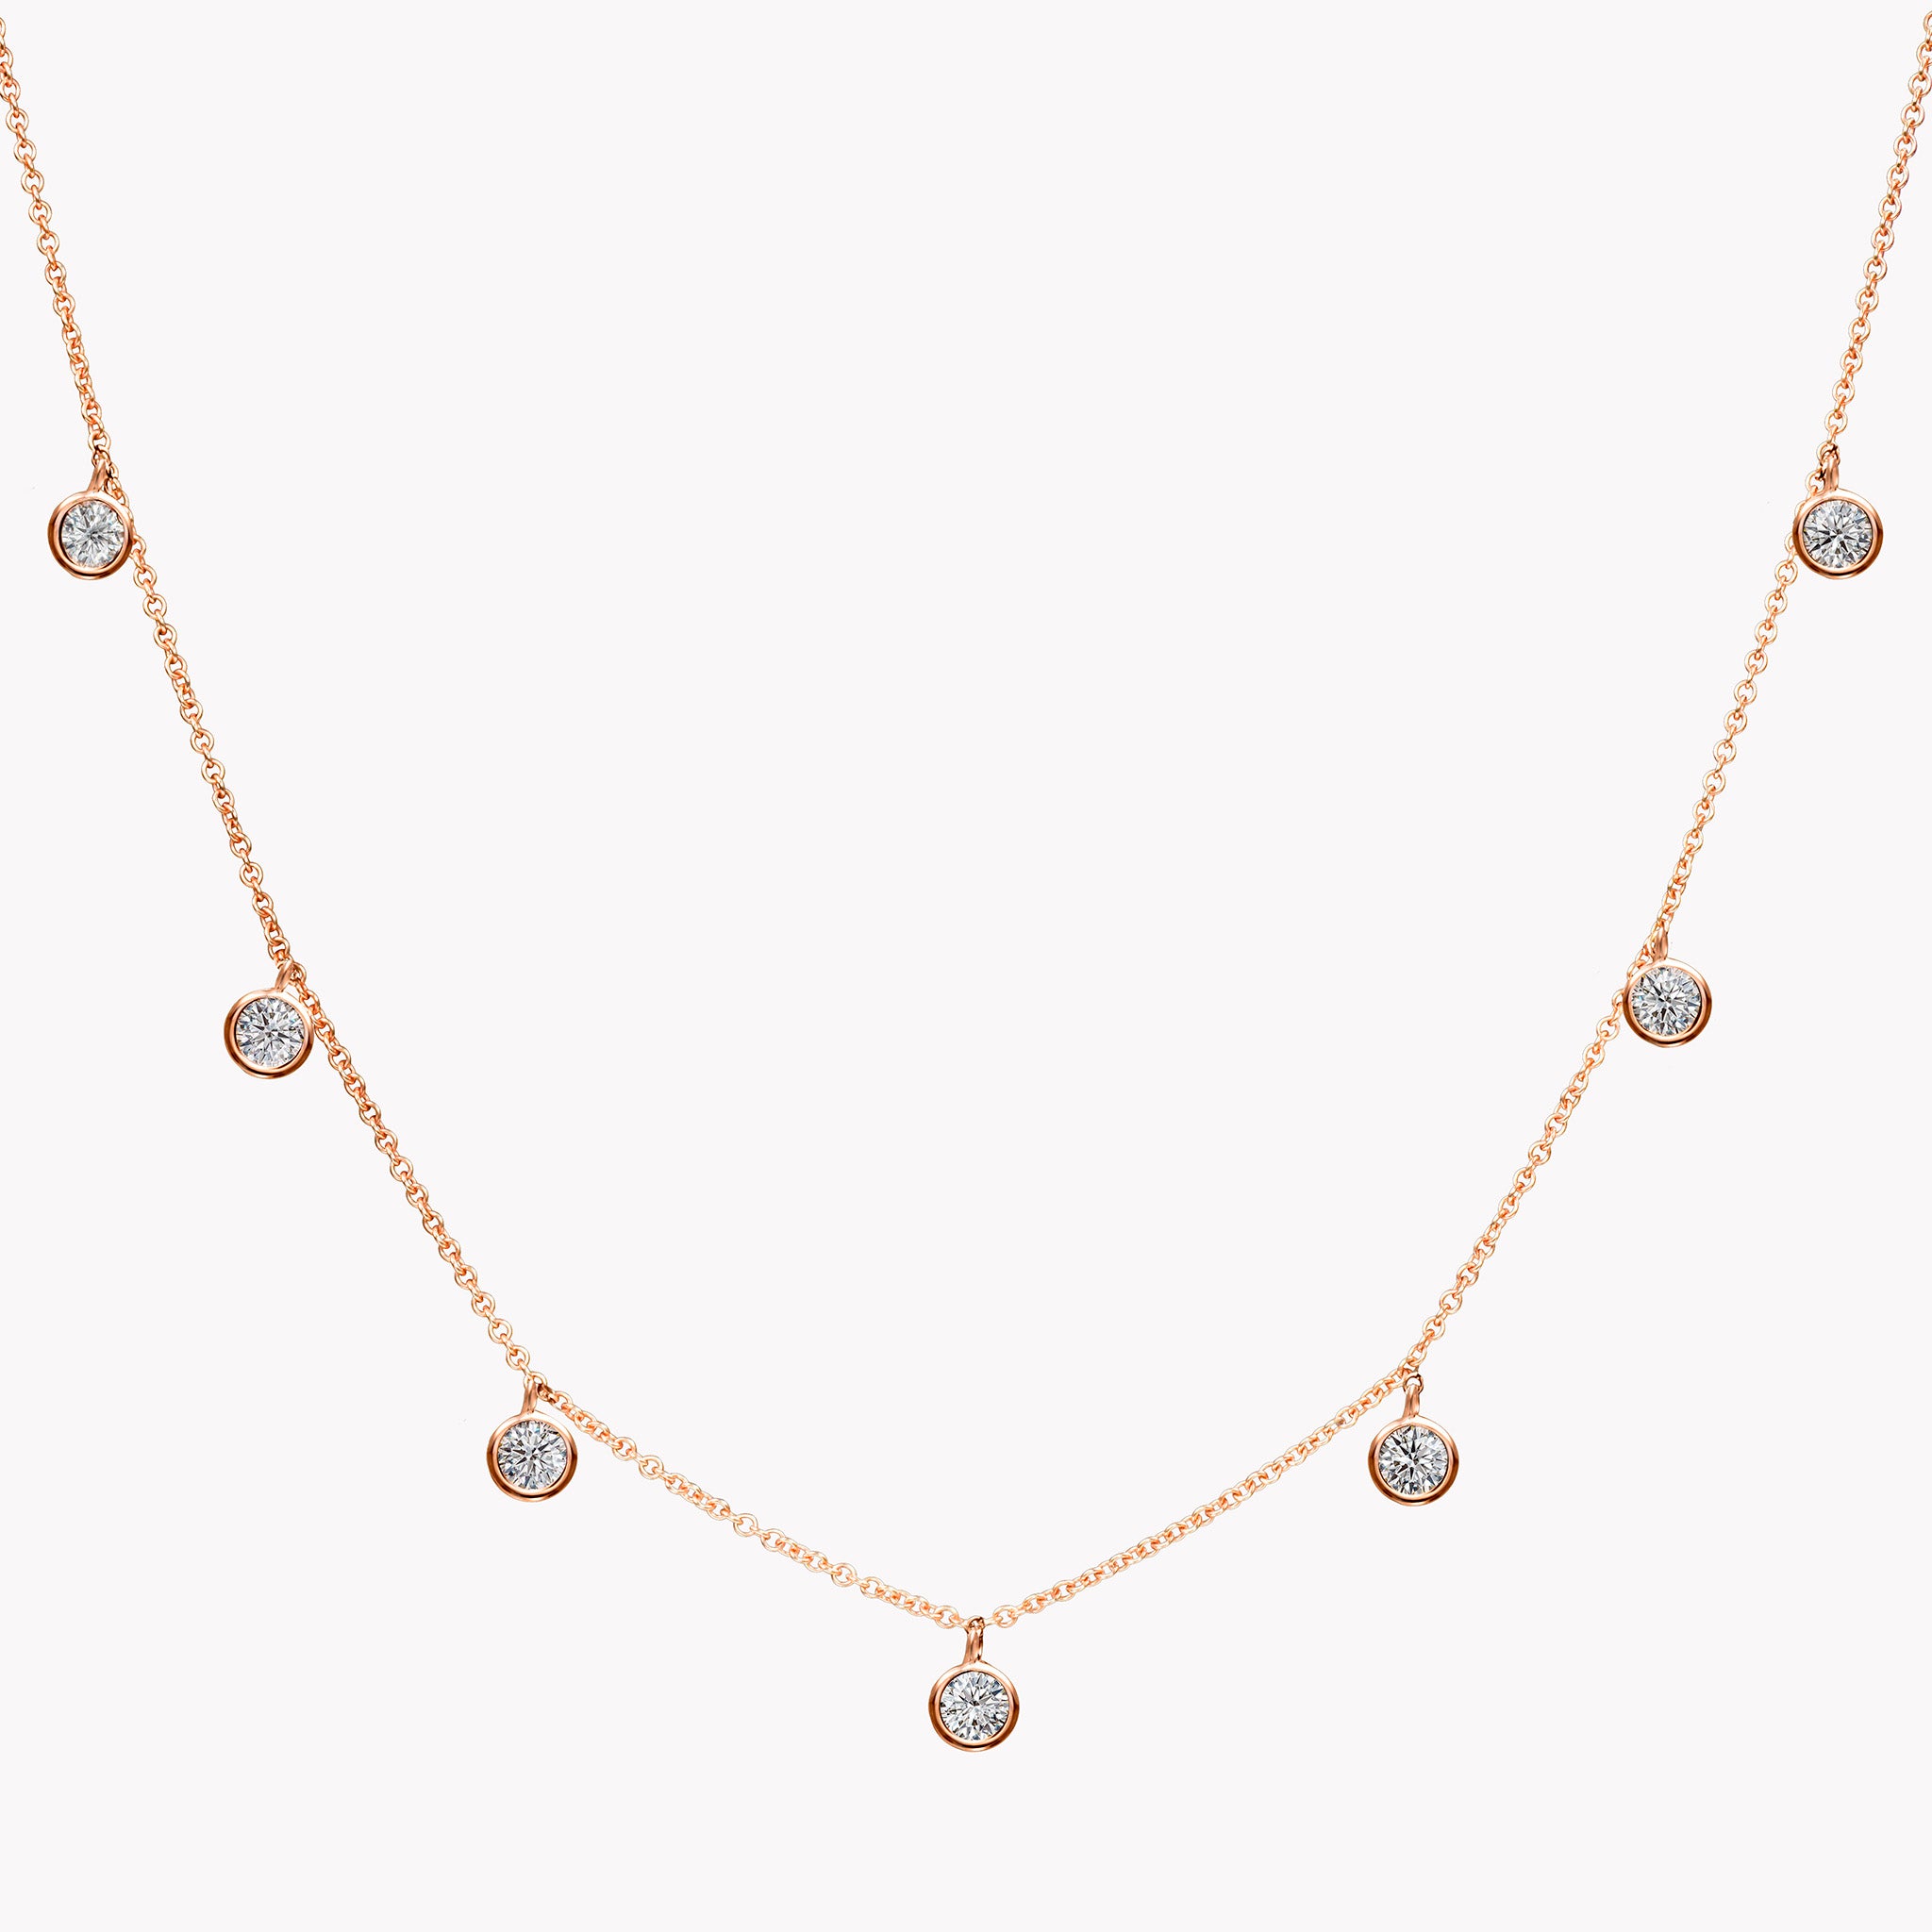 The Mia Diamond Necklace